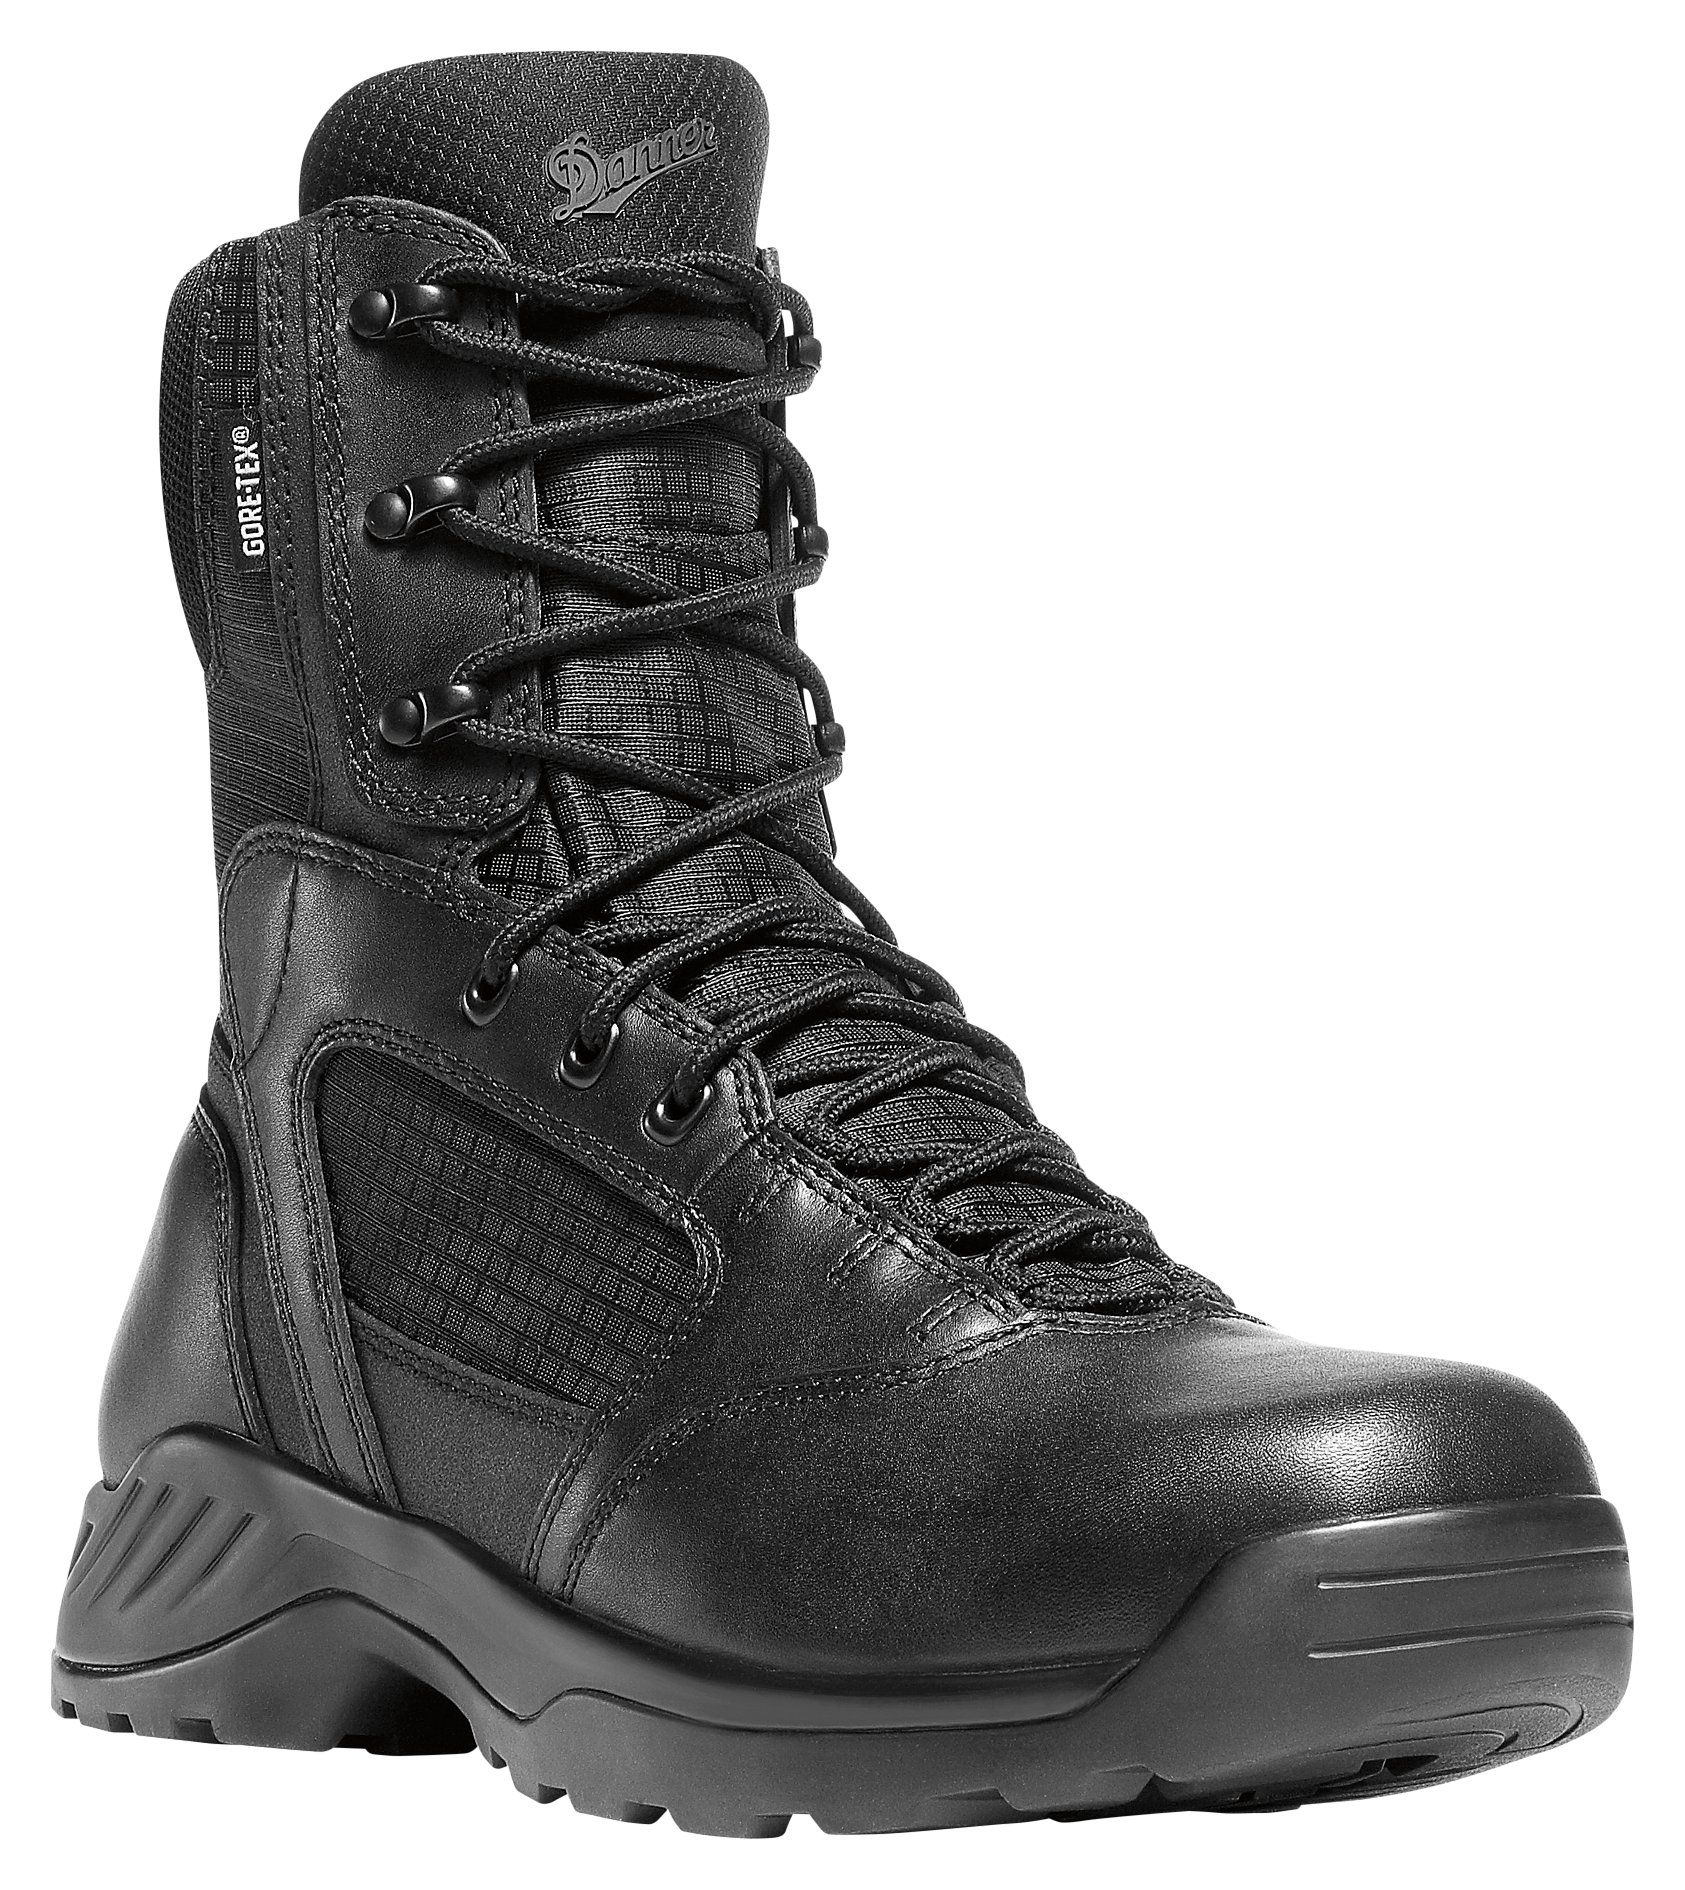 Danner Kinetic GTX Side-Zip Waterproof Tactical Duty Boots for Men - Black - 11.5M